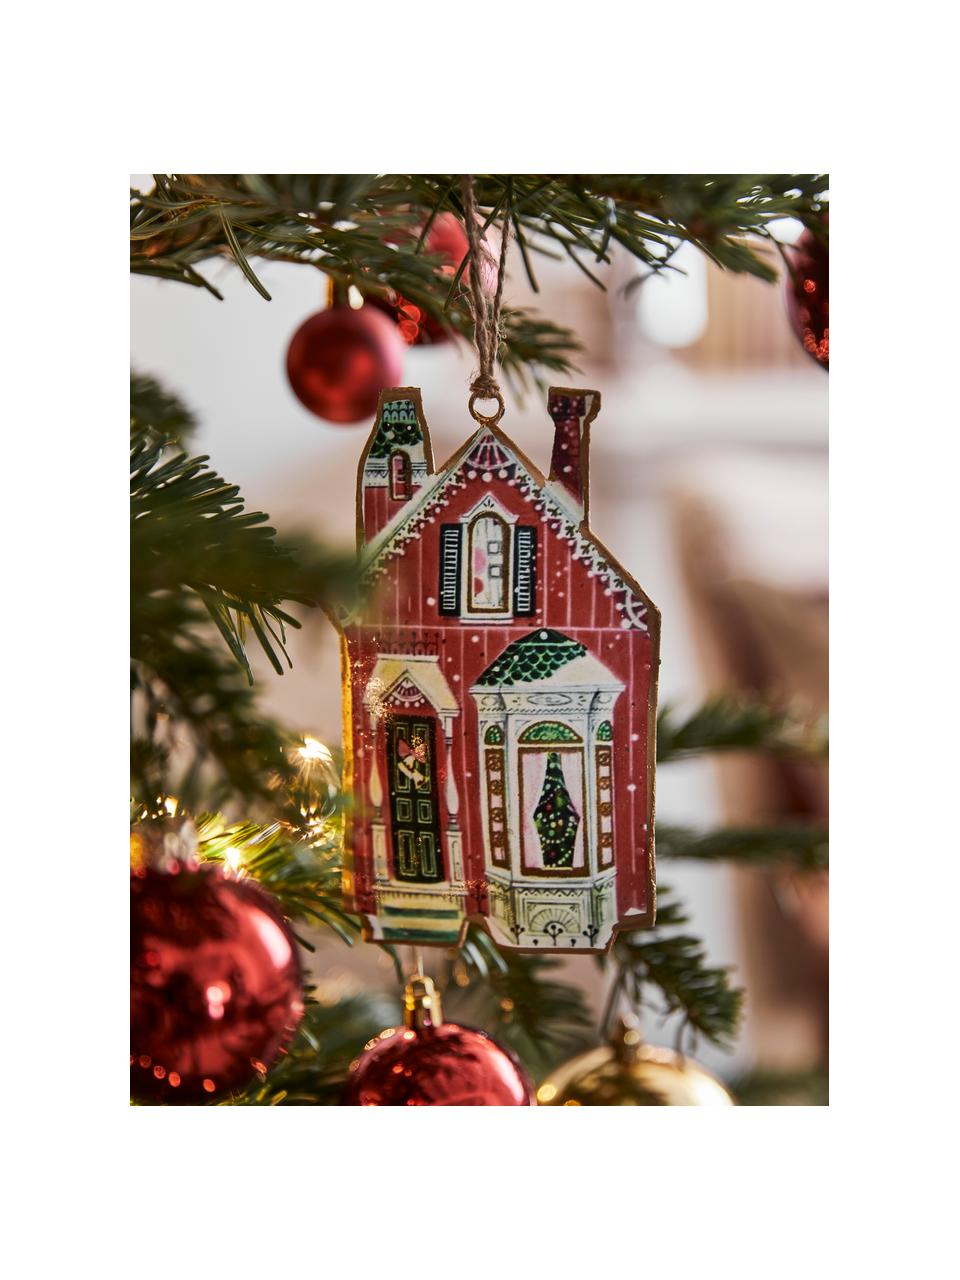 Set 4 ciondoli di Natale Houses, Metallo, Tonalità rosse, tonalità verde, Set in varie misure